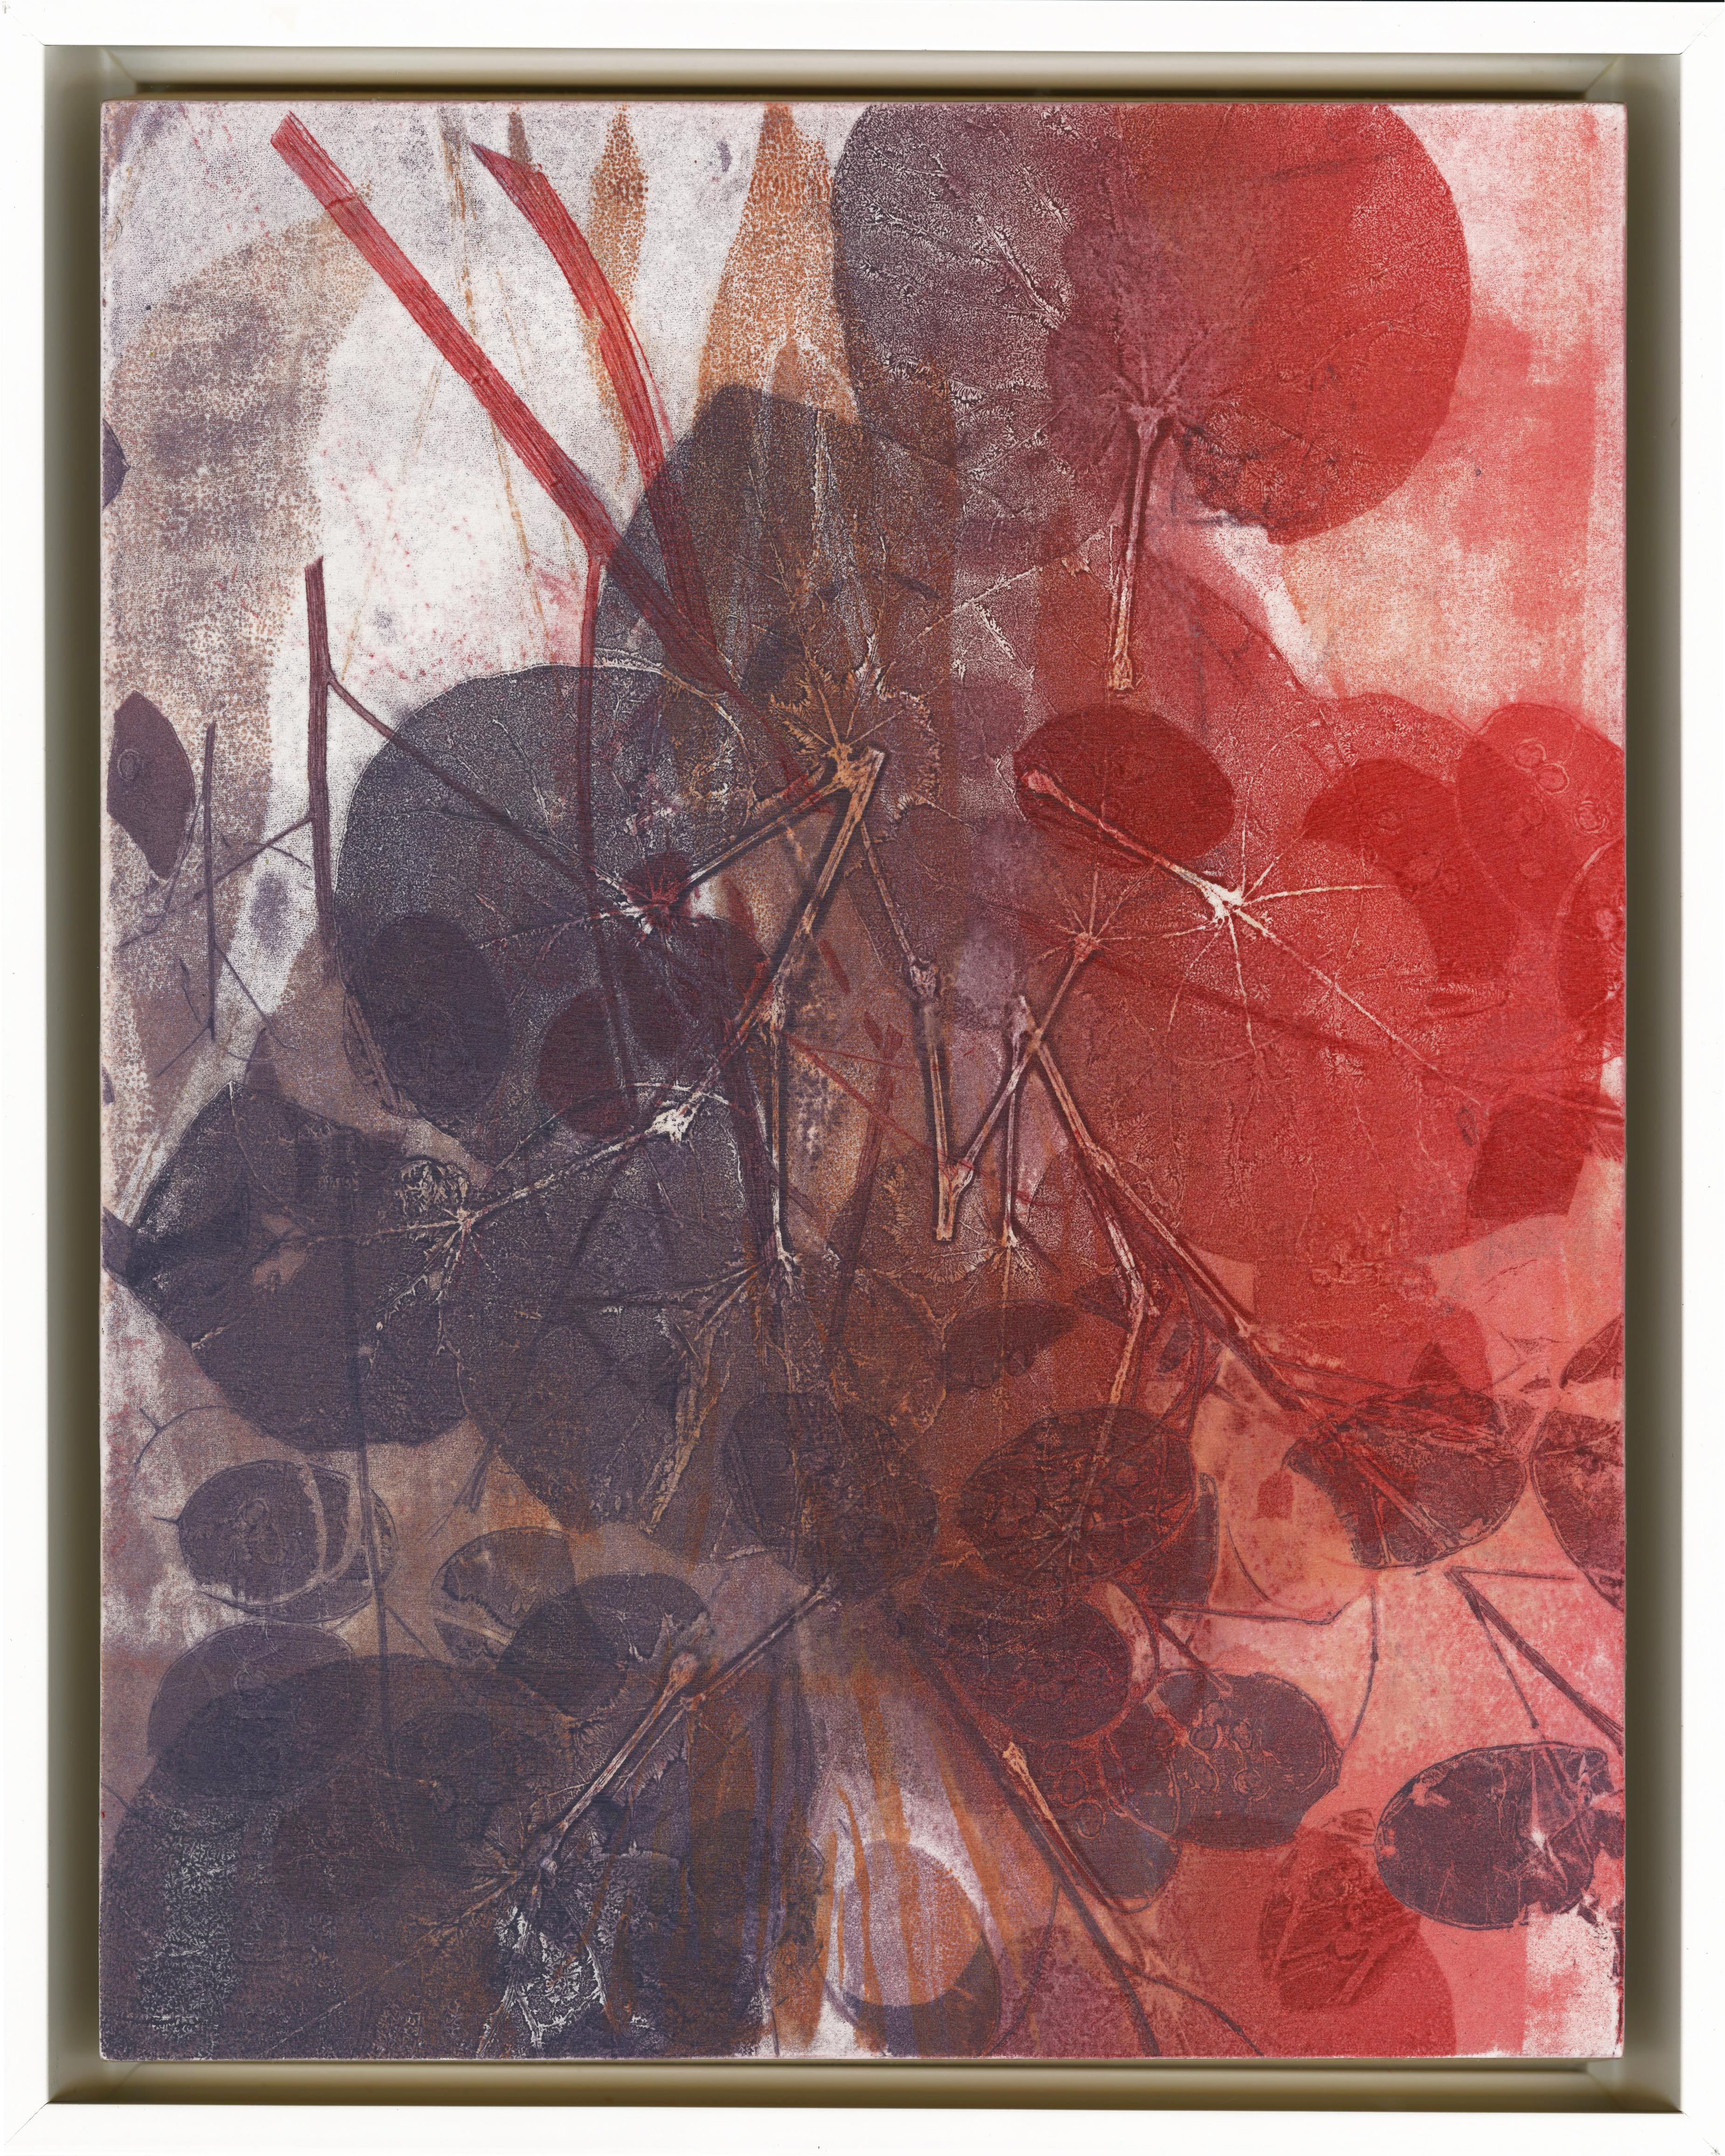 Terni 10-18/Aster Leaf, Grass and Moonwort in Violet + Scarlet - Print by Nina Tichava